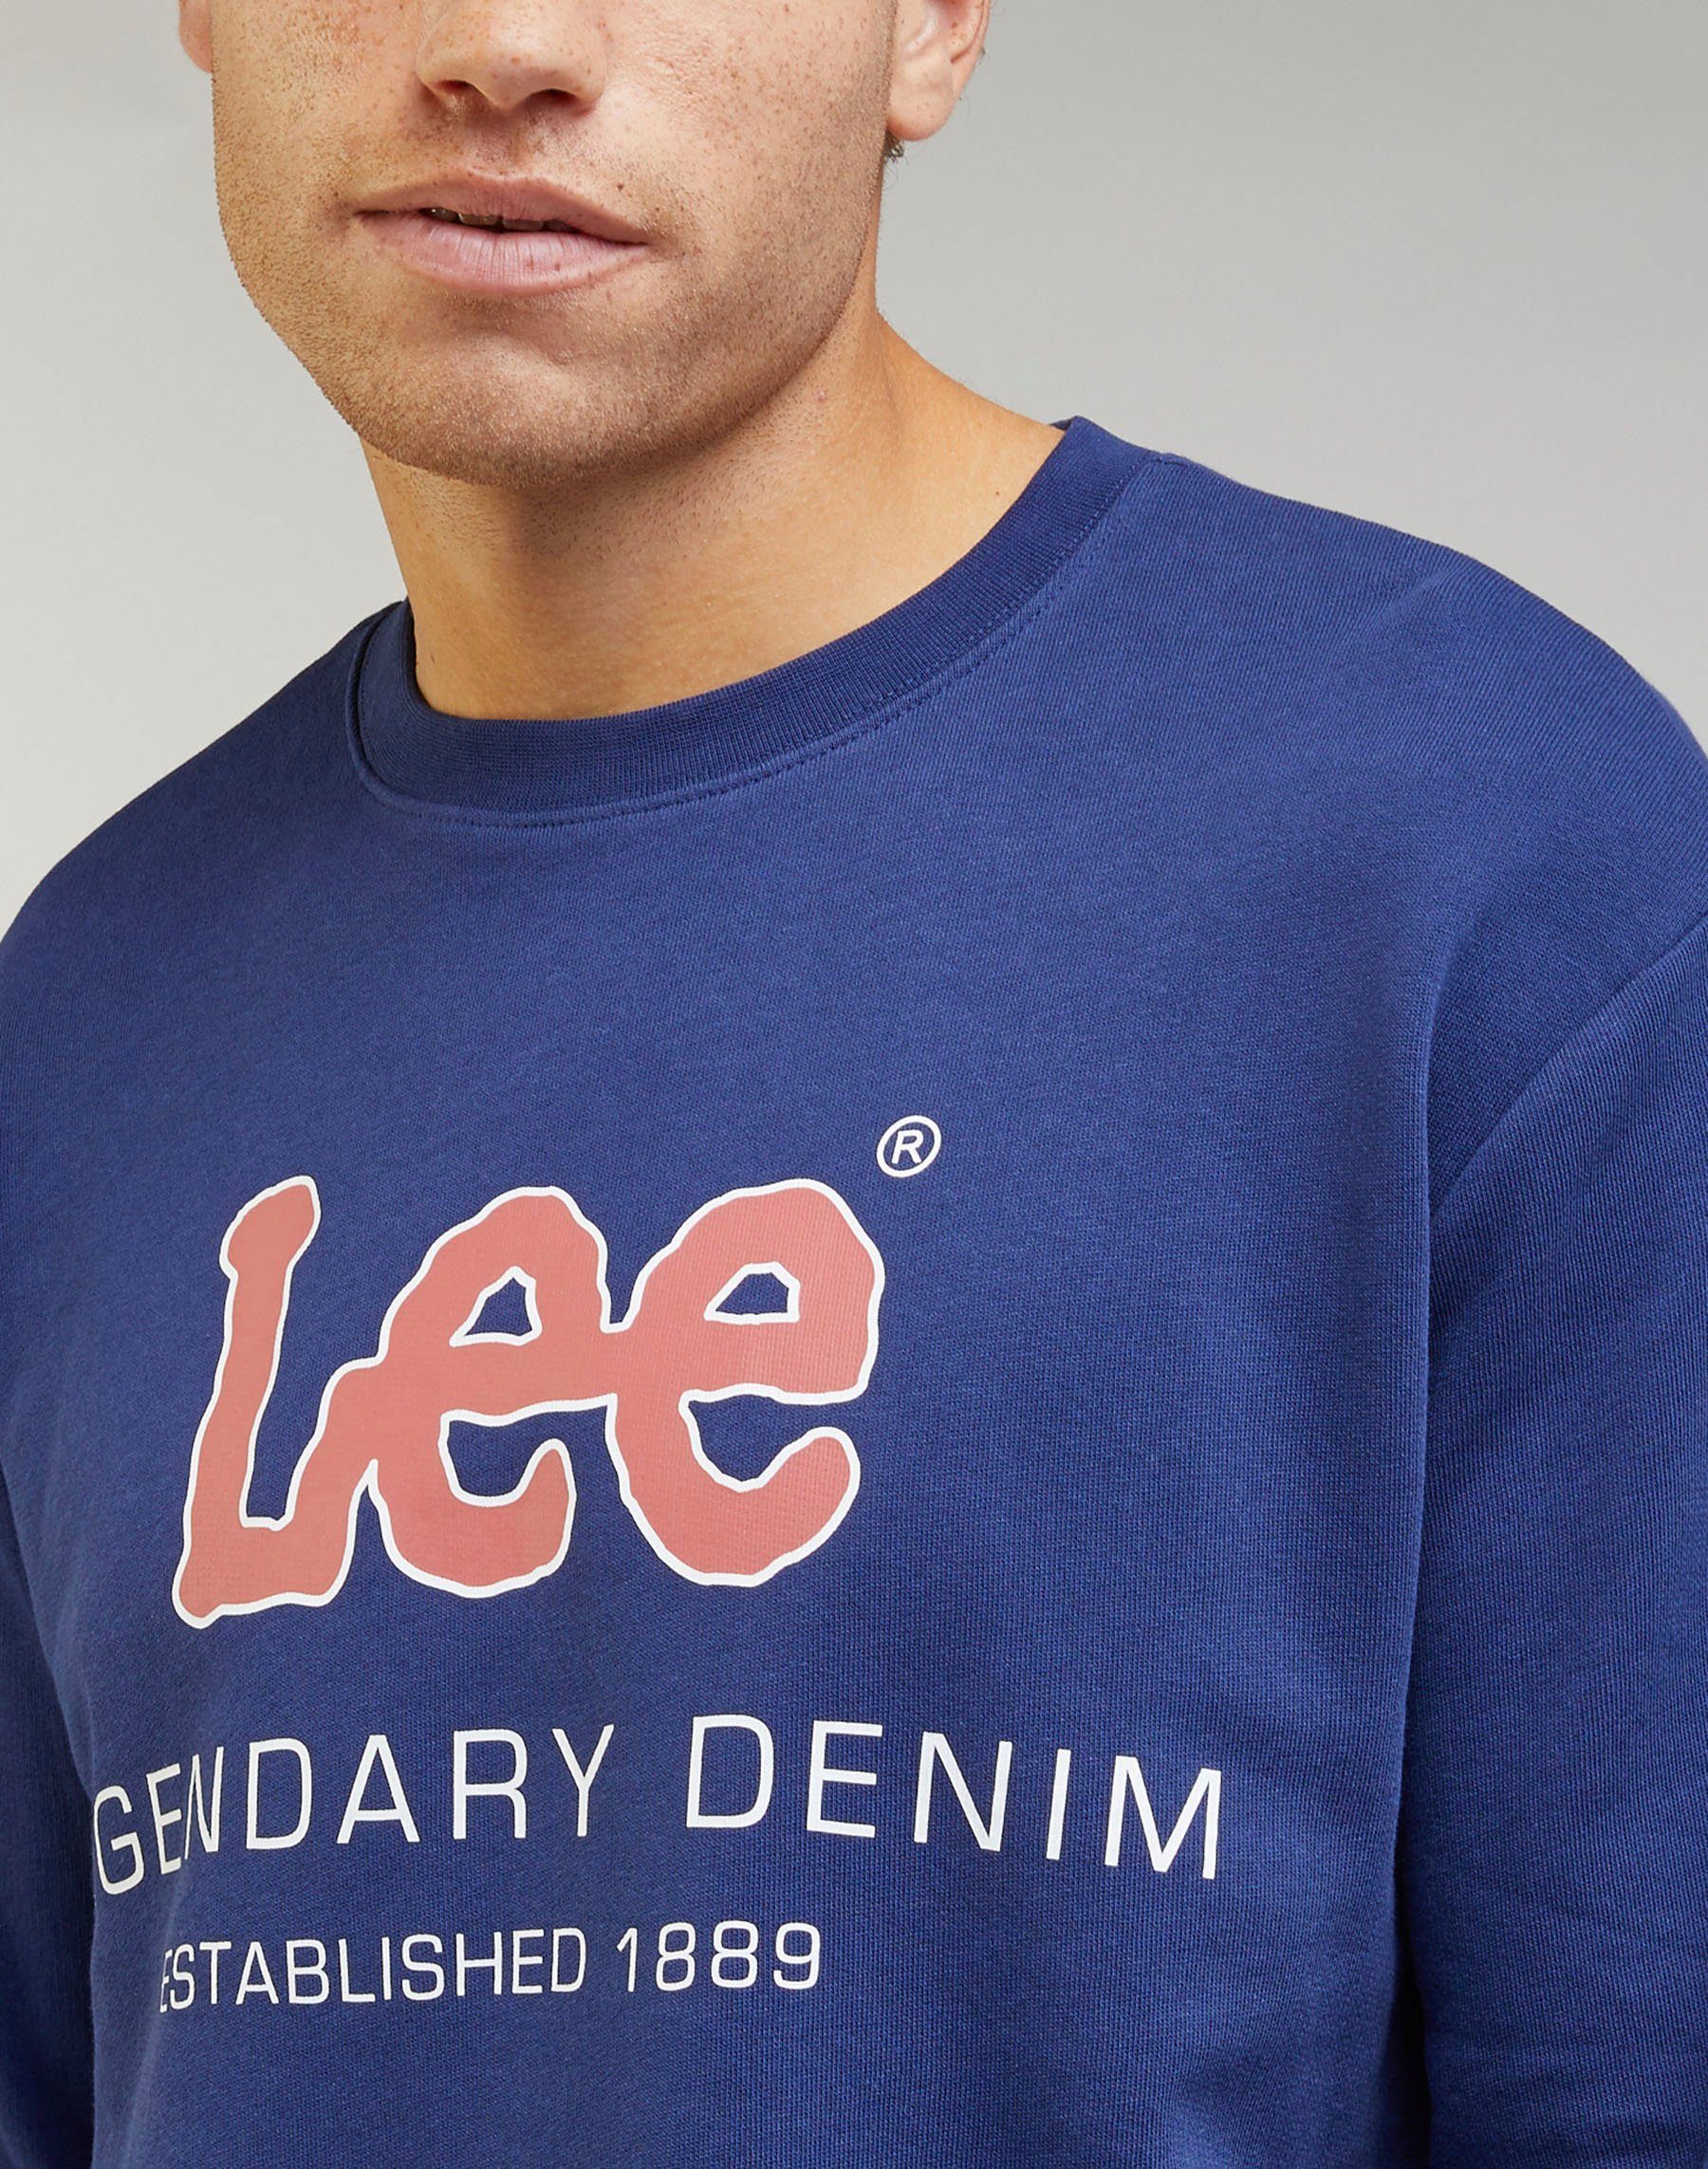 Lee® Sweatshirt LEGENDARY DENIM blue medieval CREW